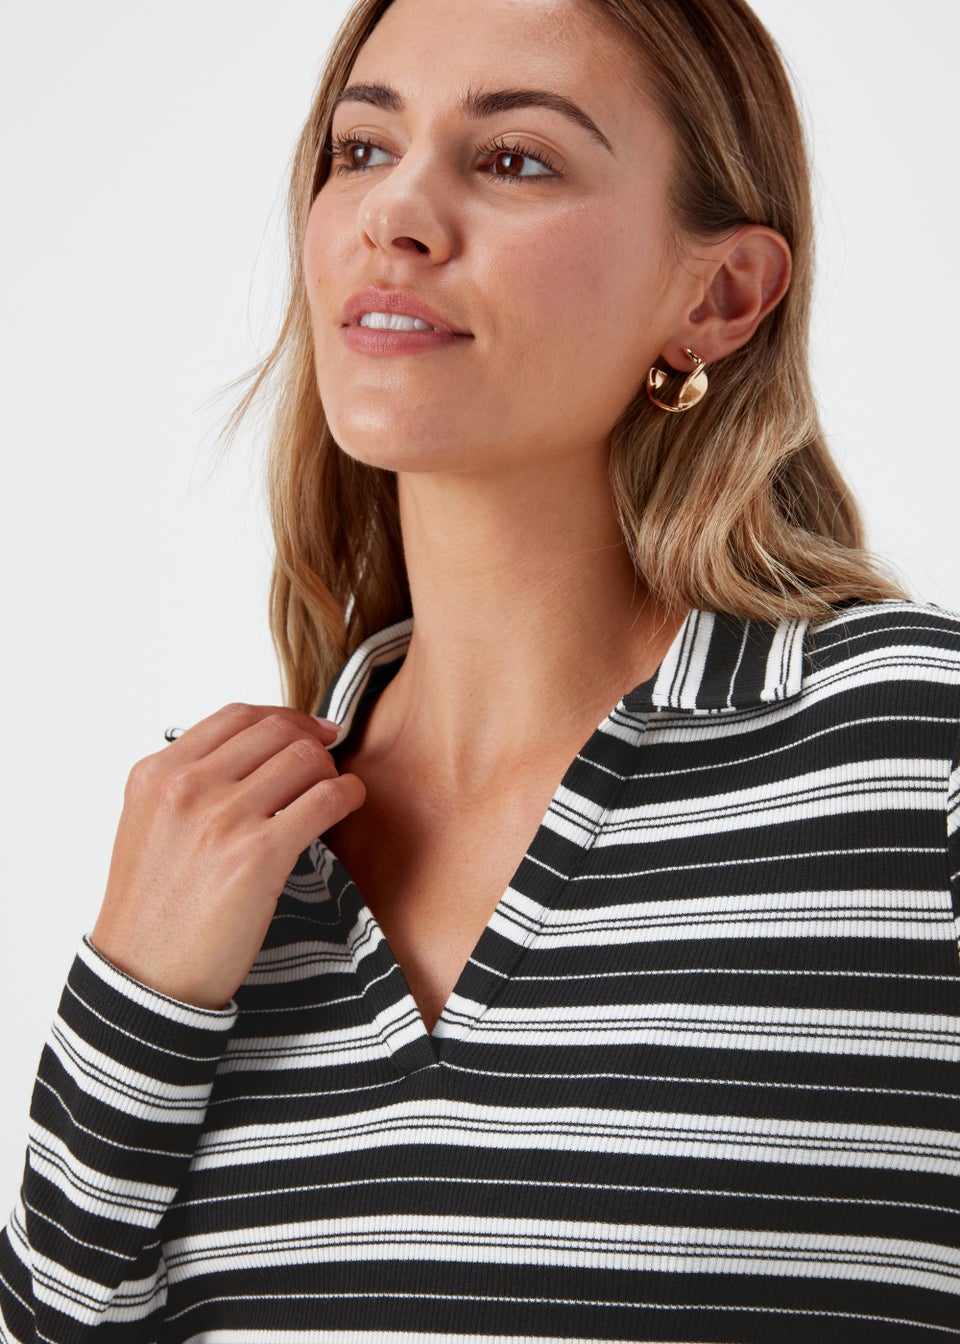 Black & White Stripe Long Sleeve Polo Shirt